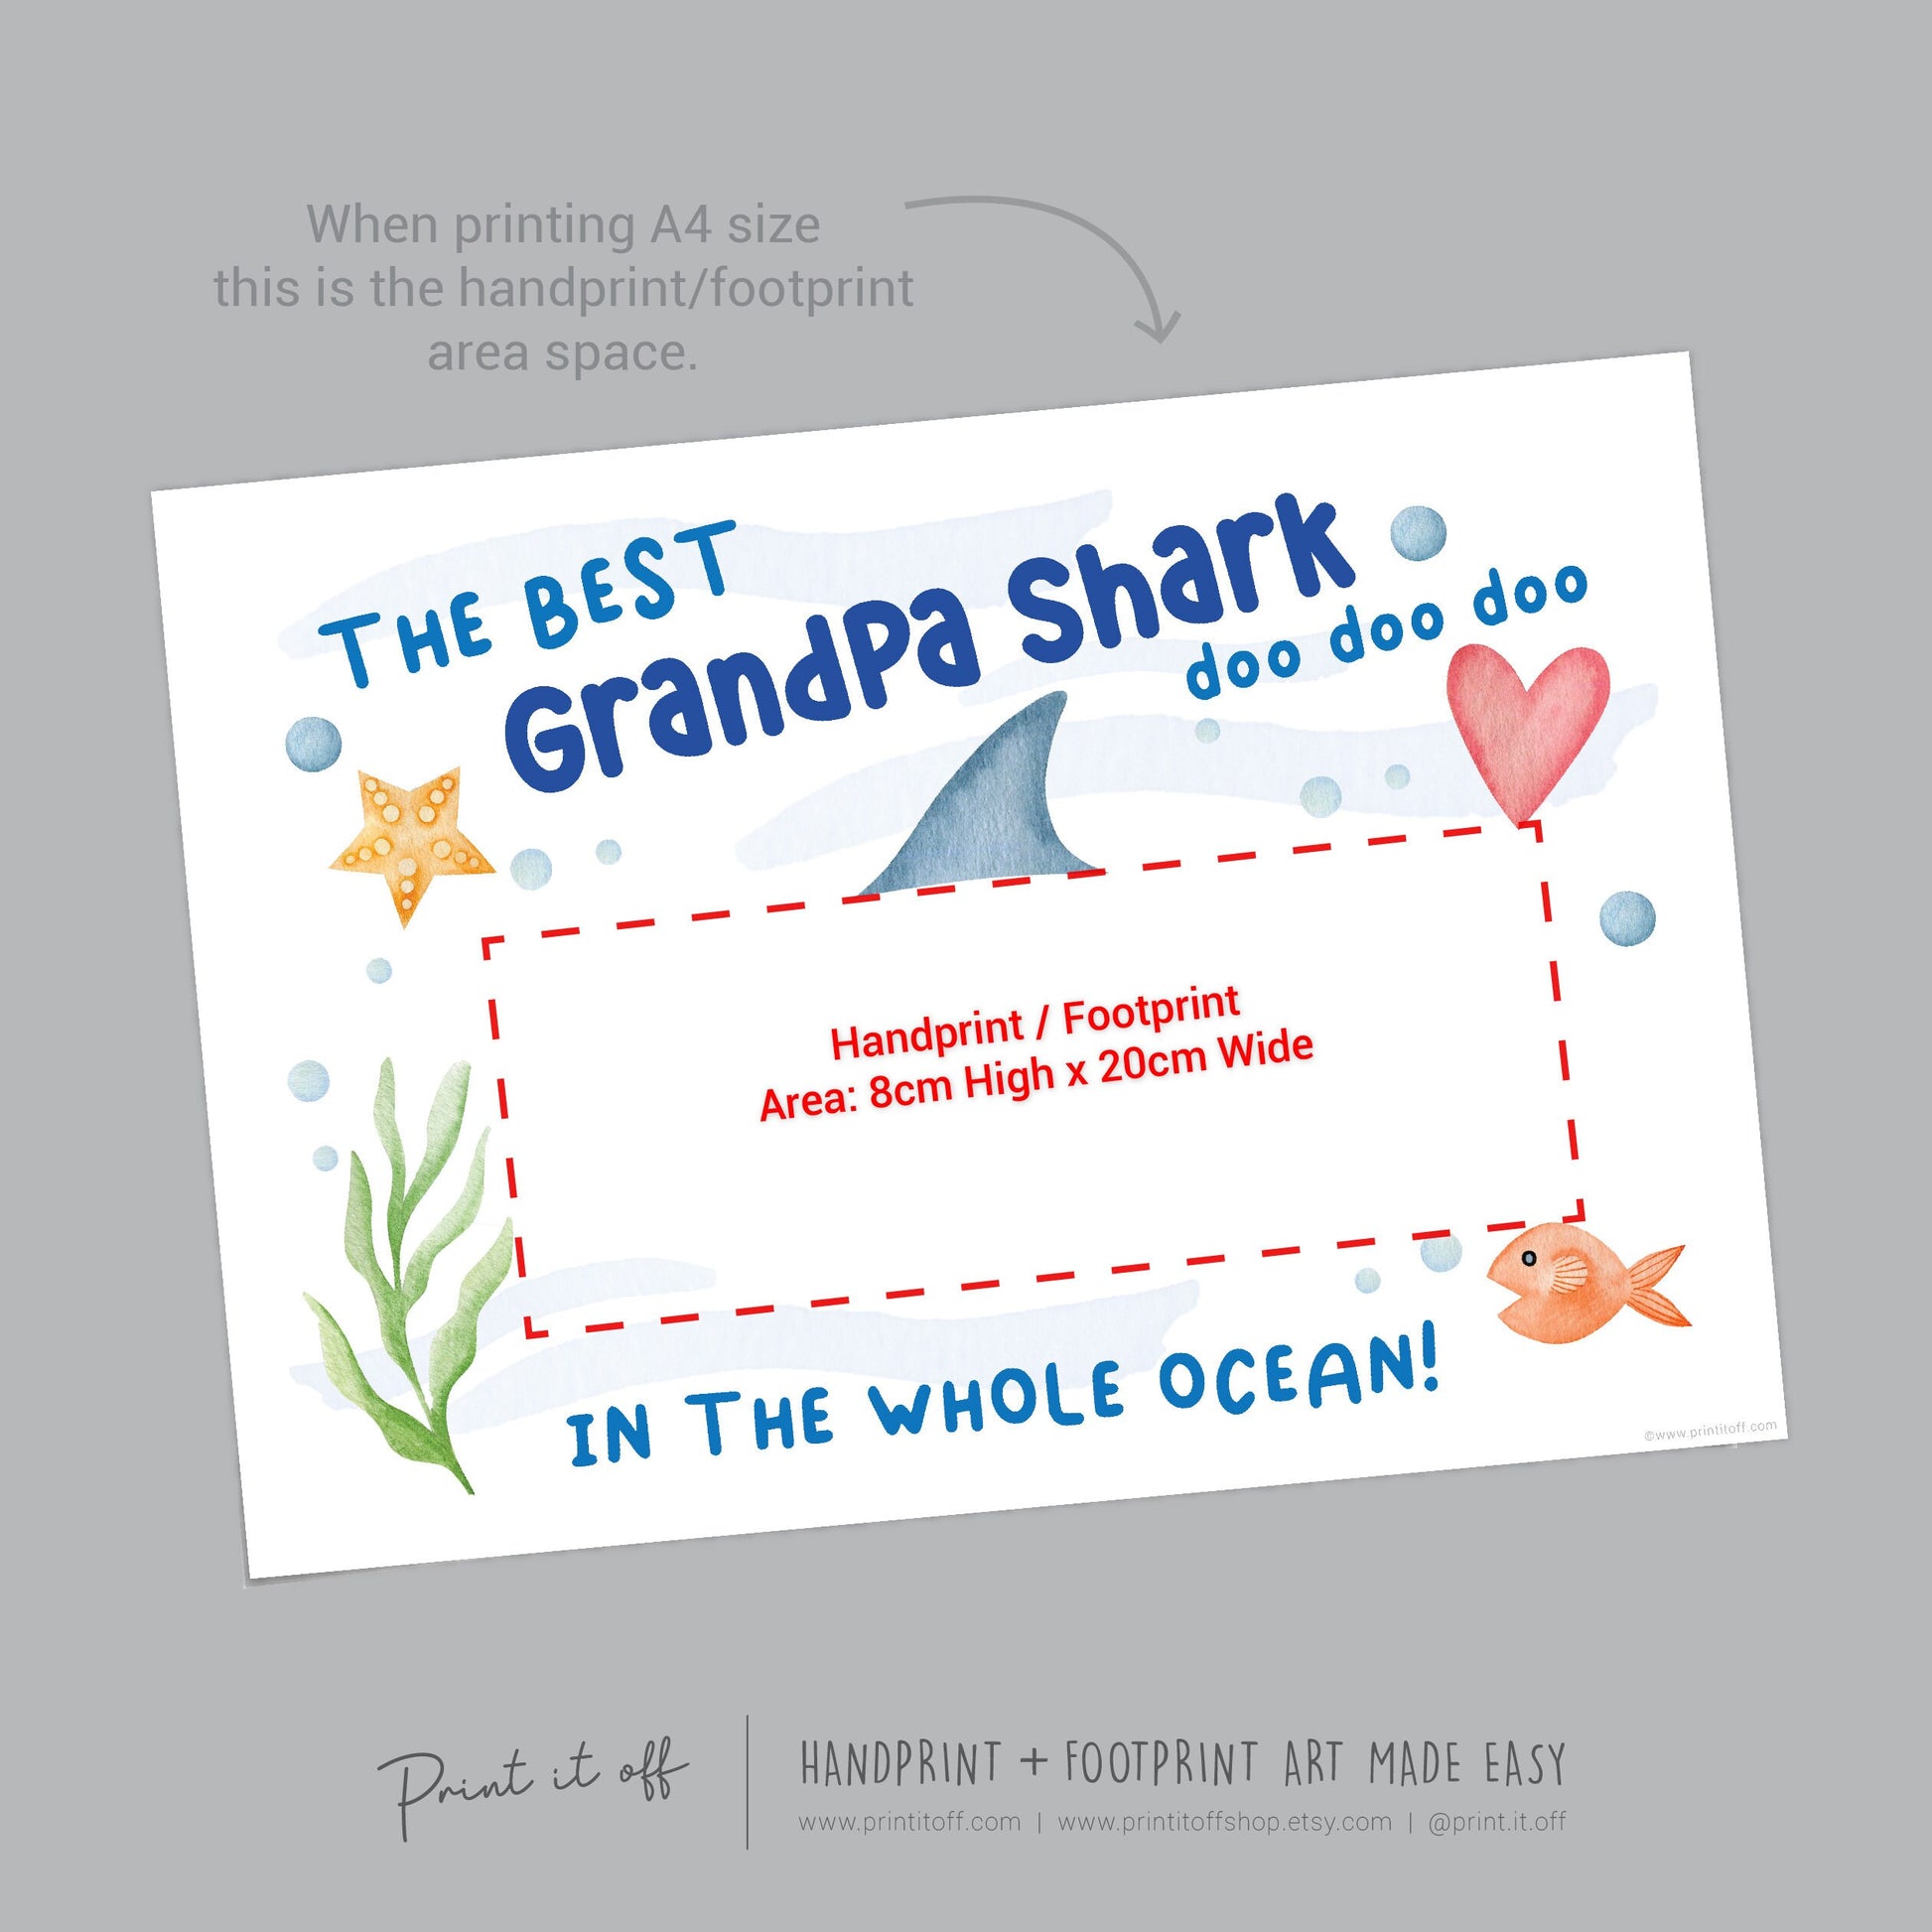 Best Grandpa Shark / Footprint Handprint Art Craft Father's Day Birthday / Kids Baby Toddler / Keepsake Gift Card / PRINT IT OFF 0739